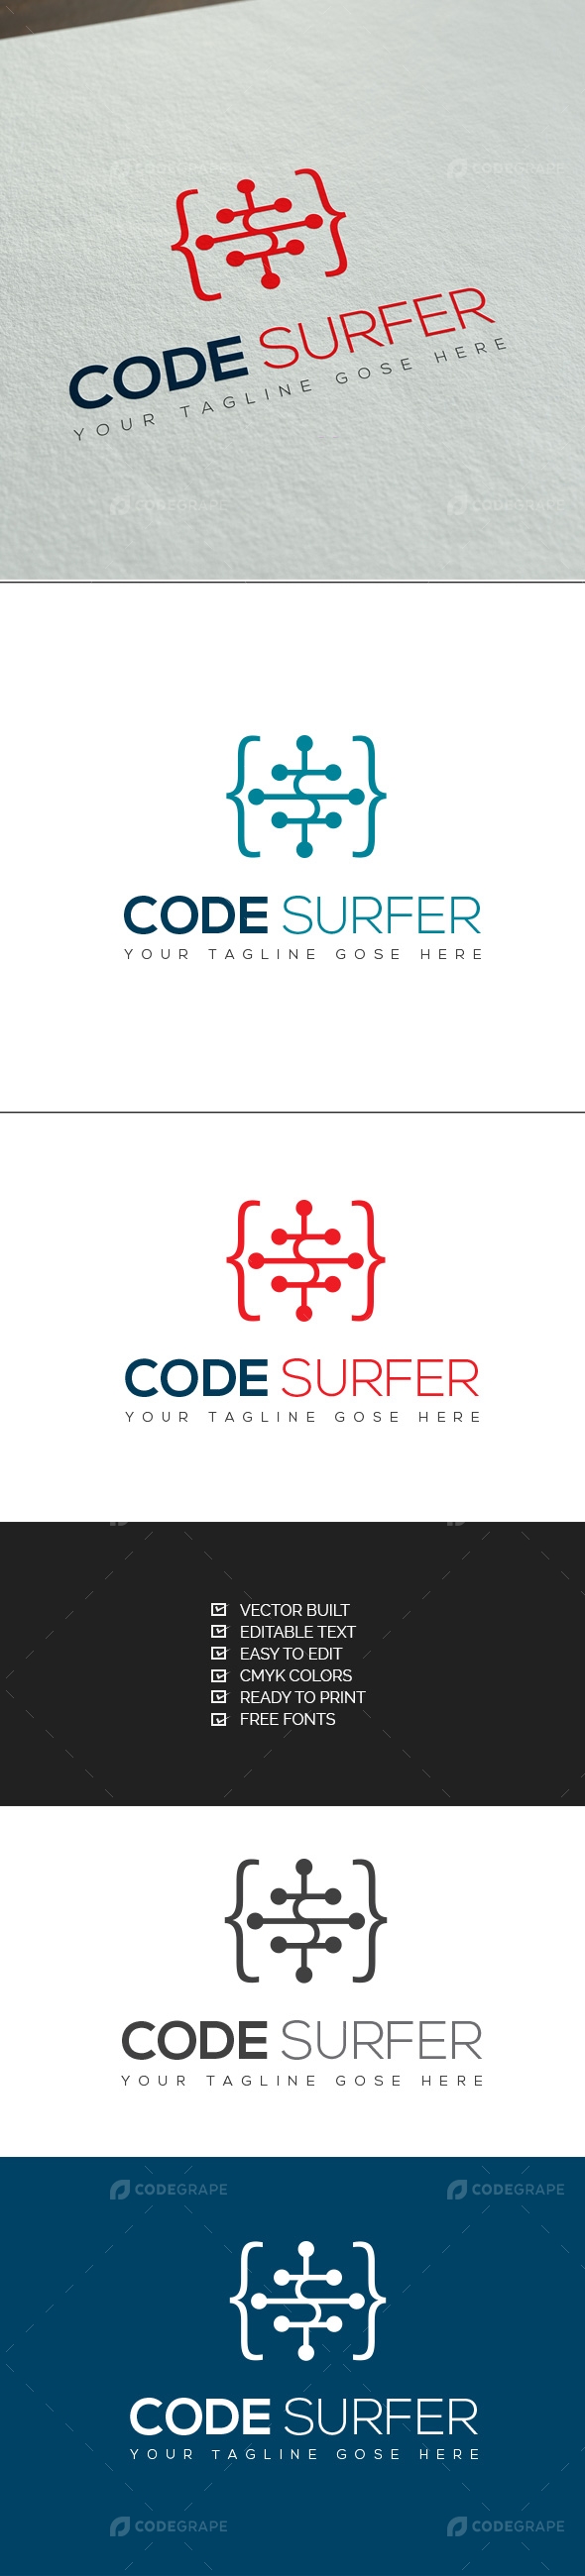 Code Surfer Logo